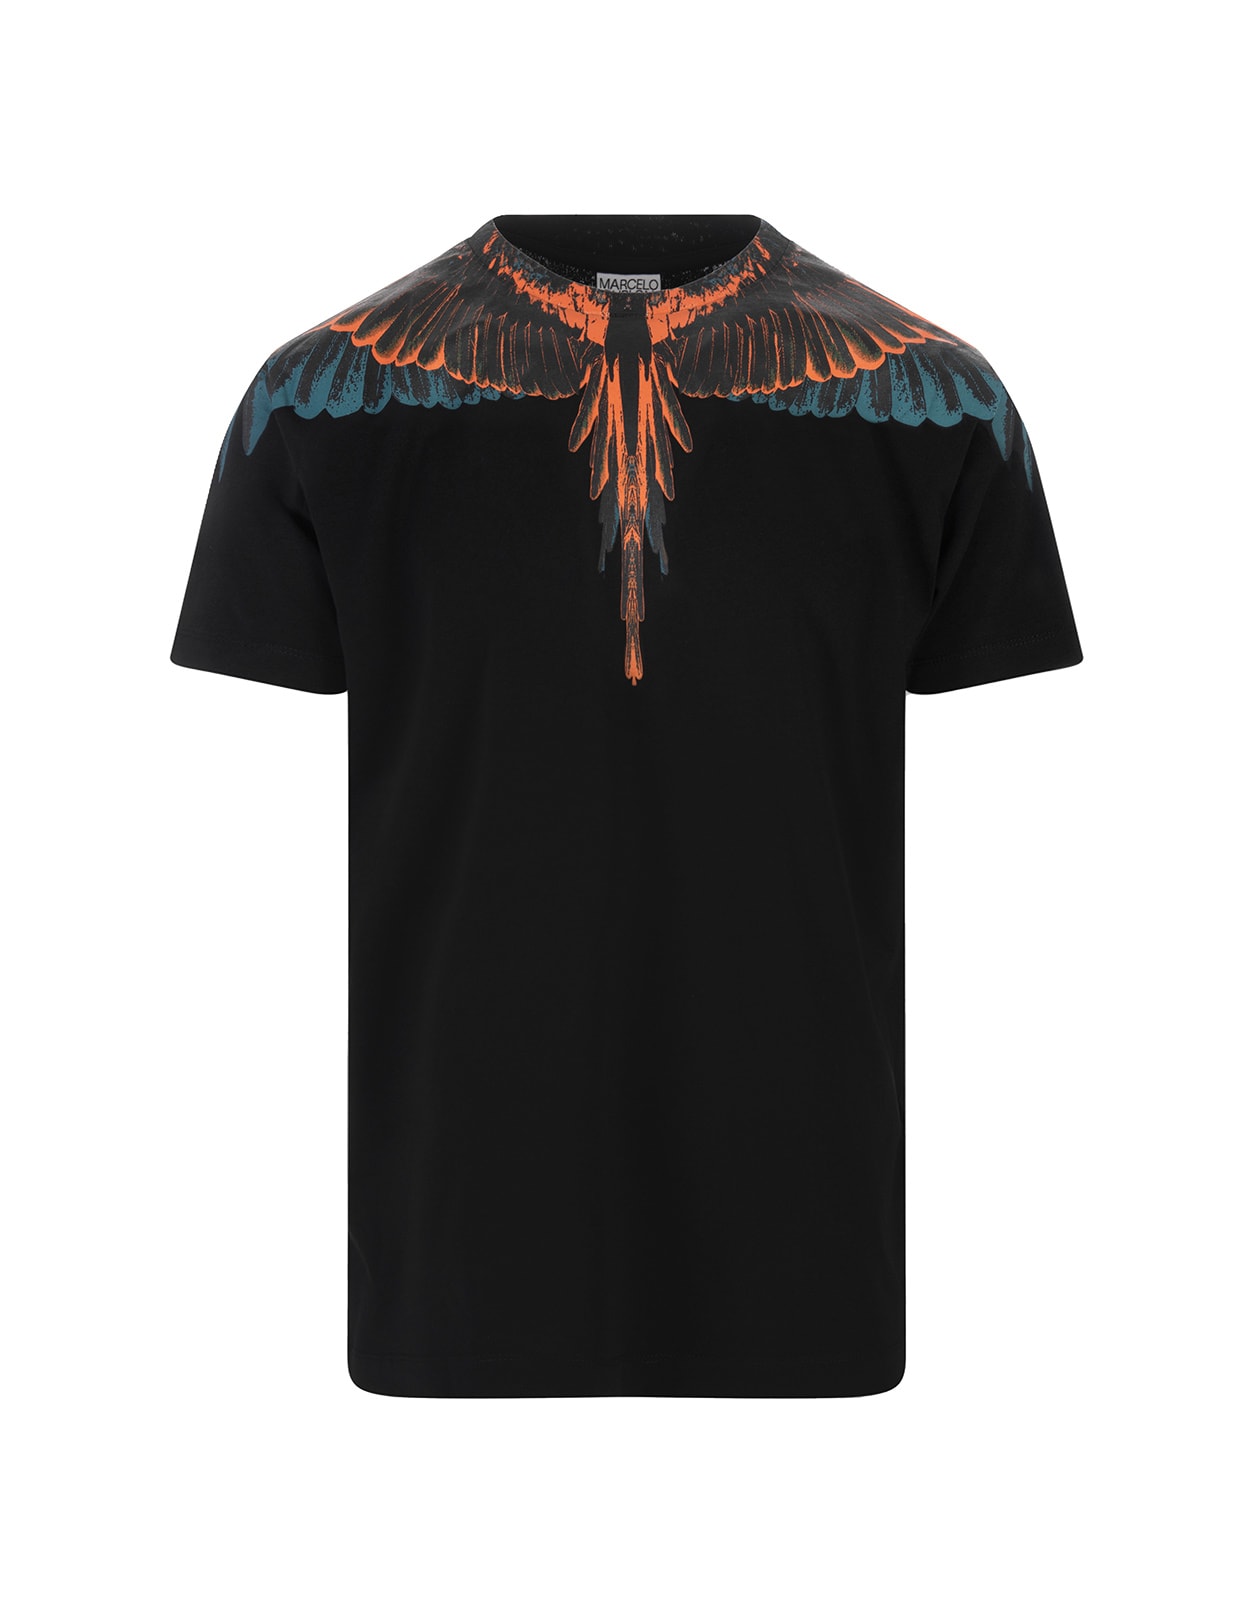 Marcelo Burlon Black T-shirt With Orange And Blue Wings